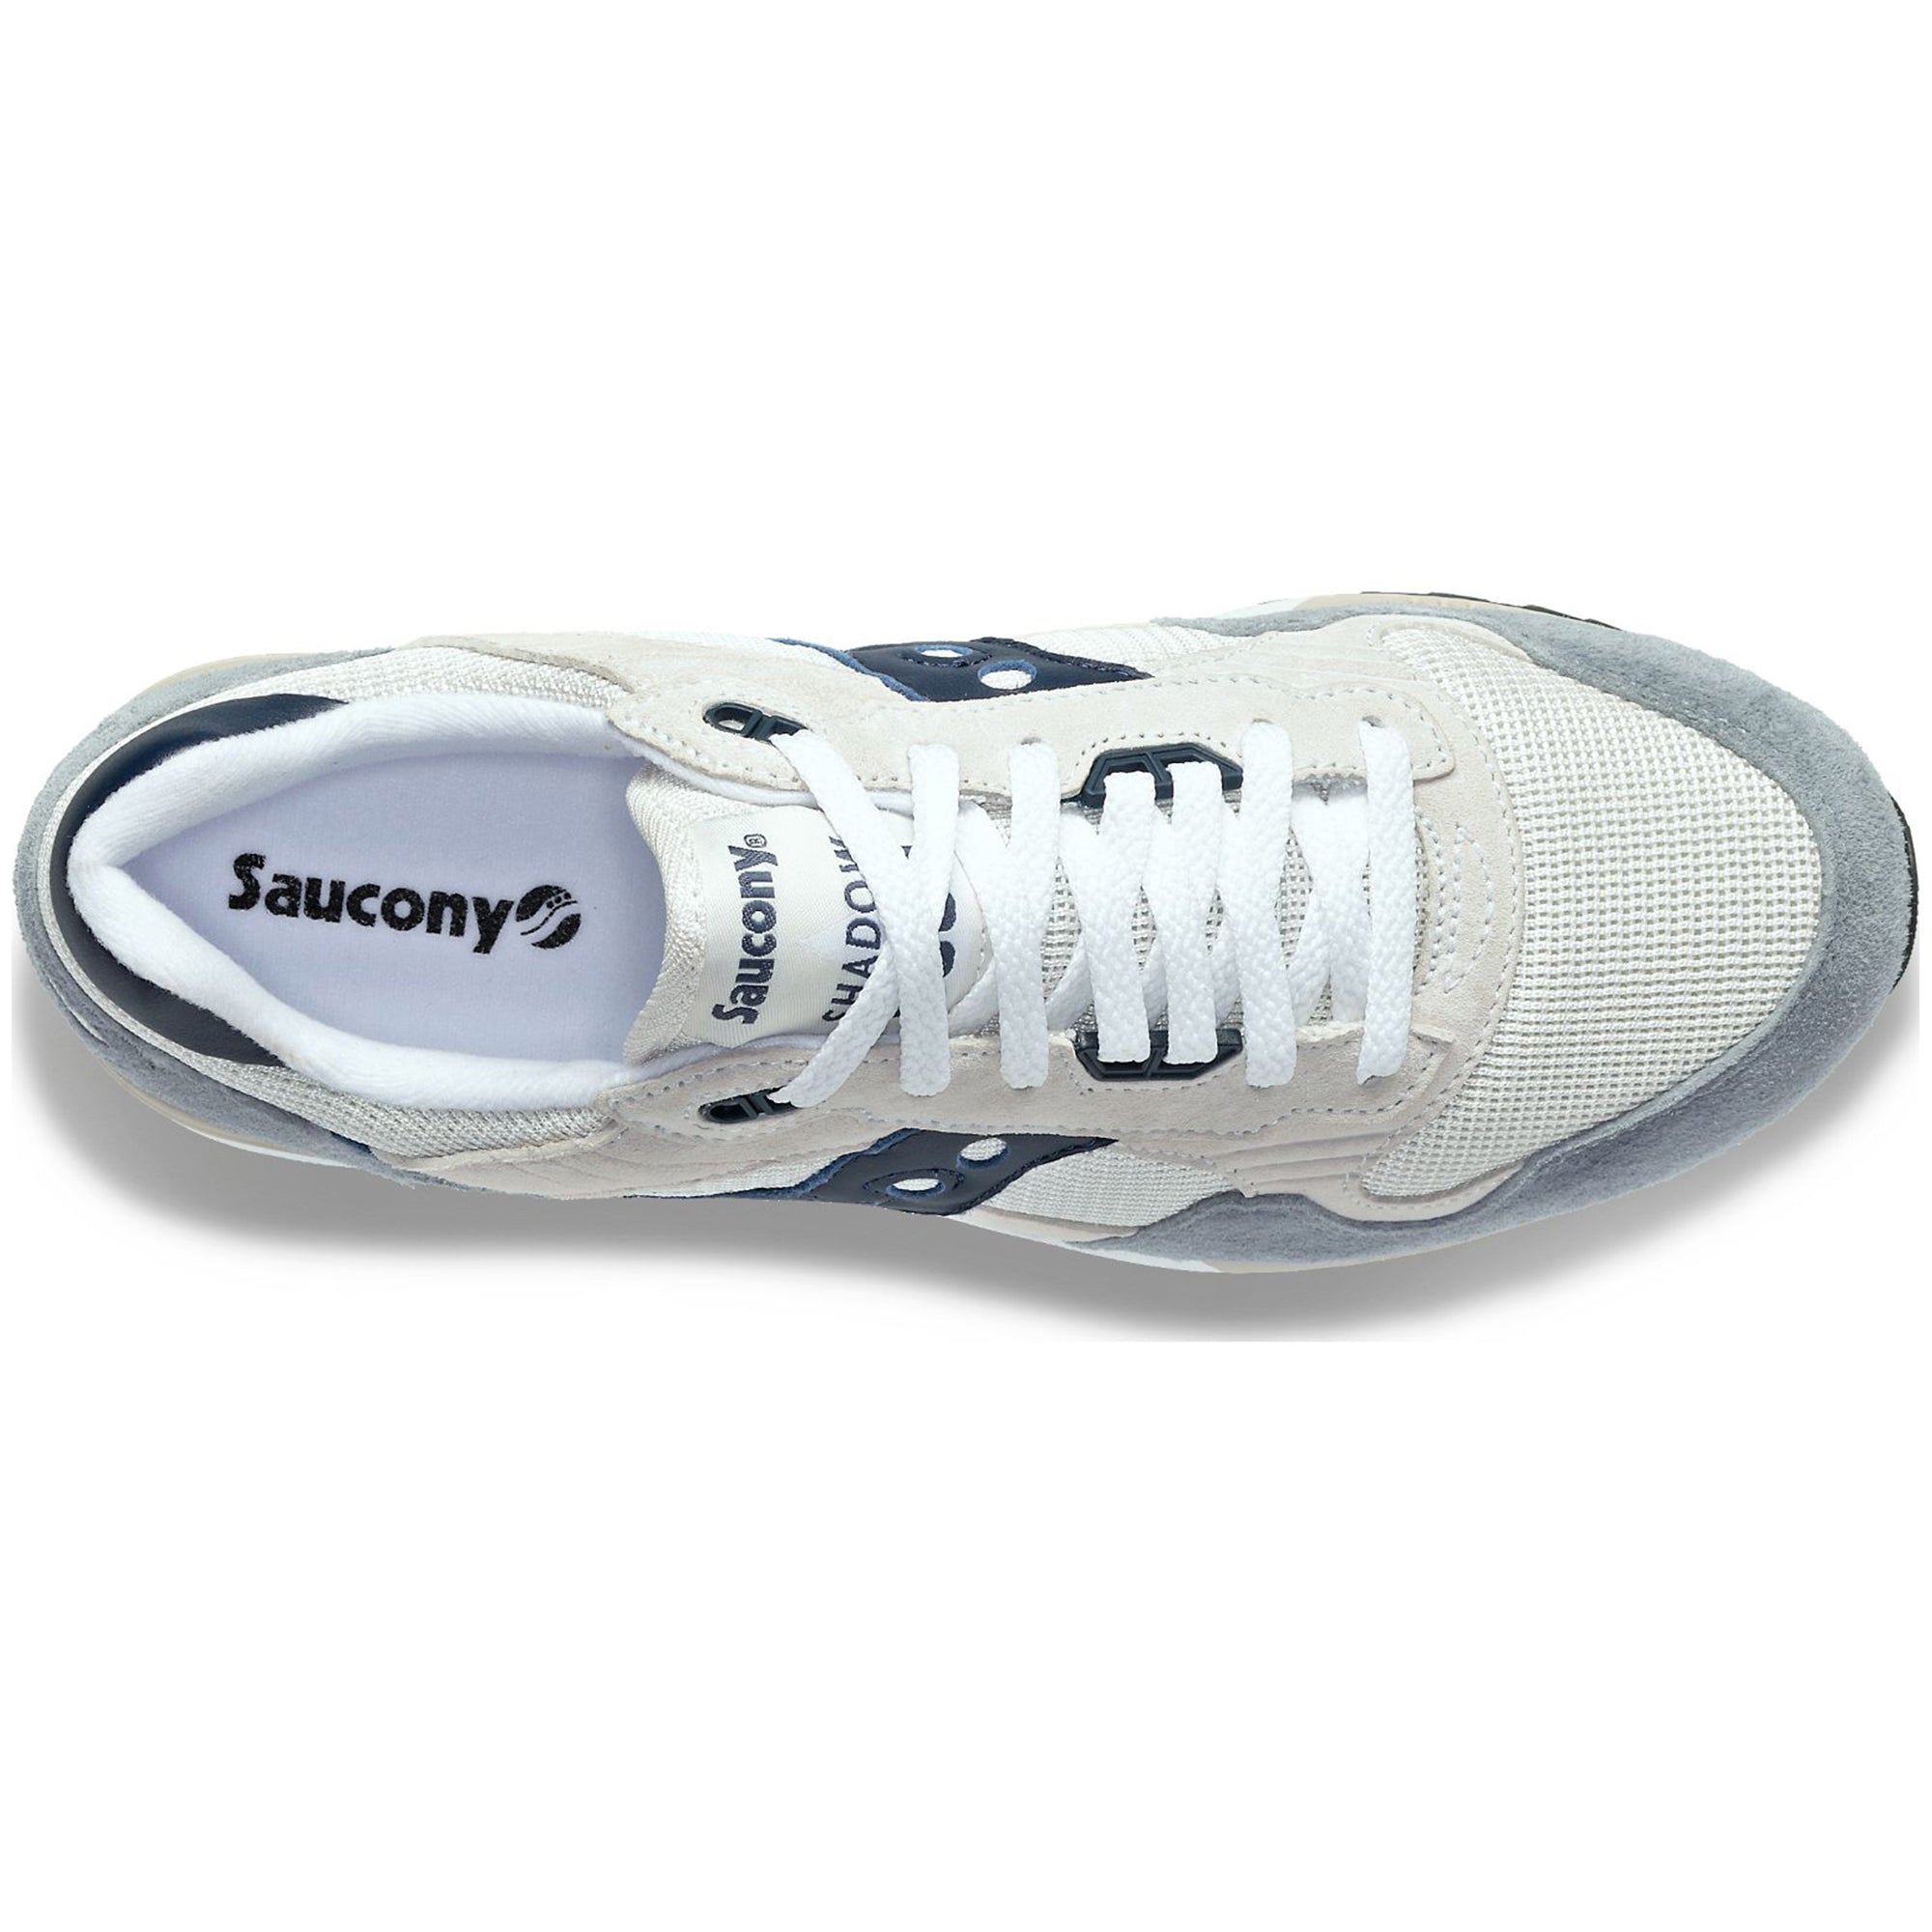 Saucony Shadow 5000 Trainers - Light Grey/Navy